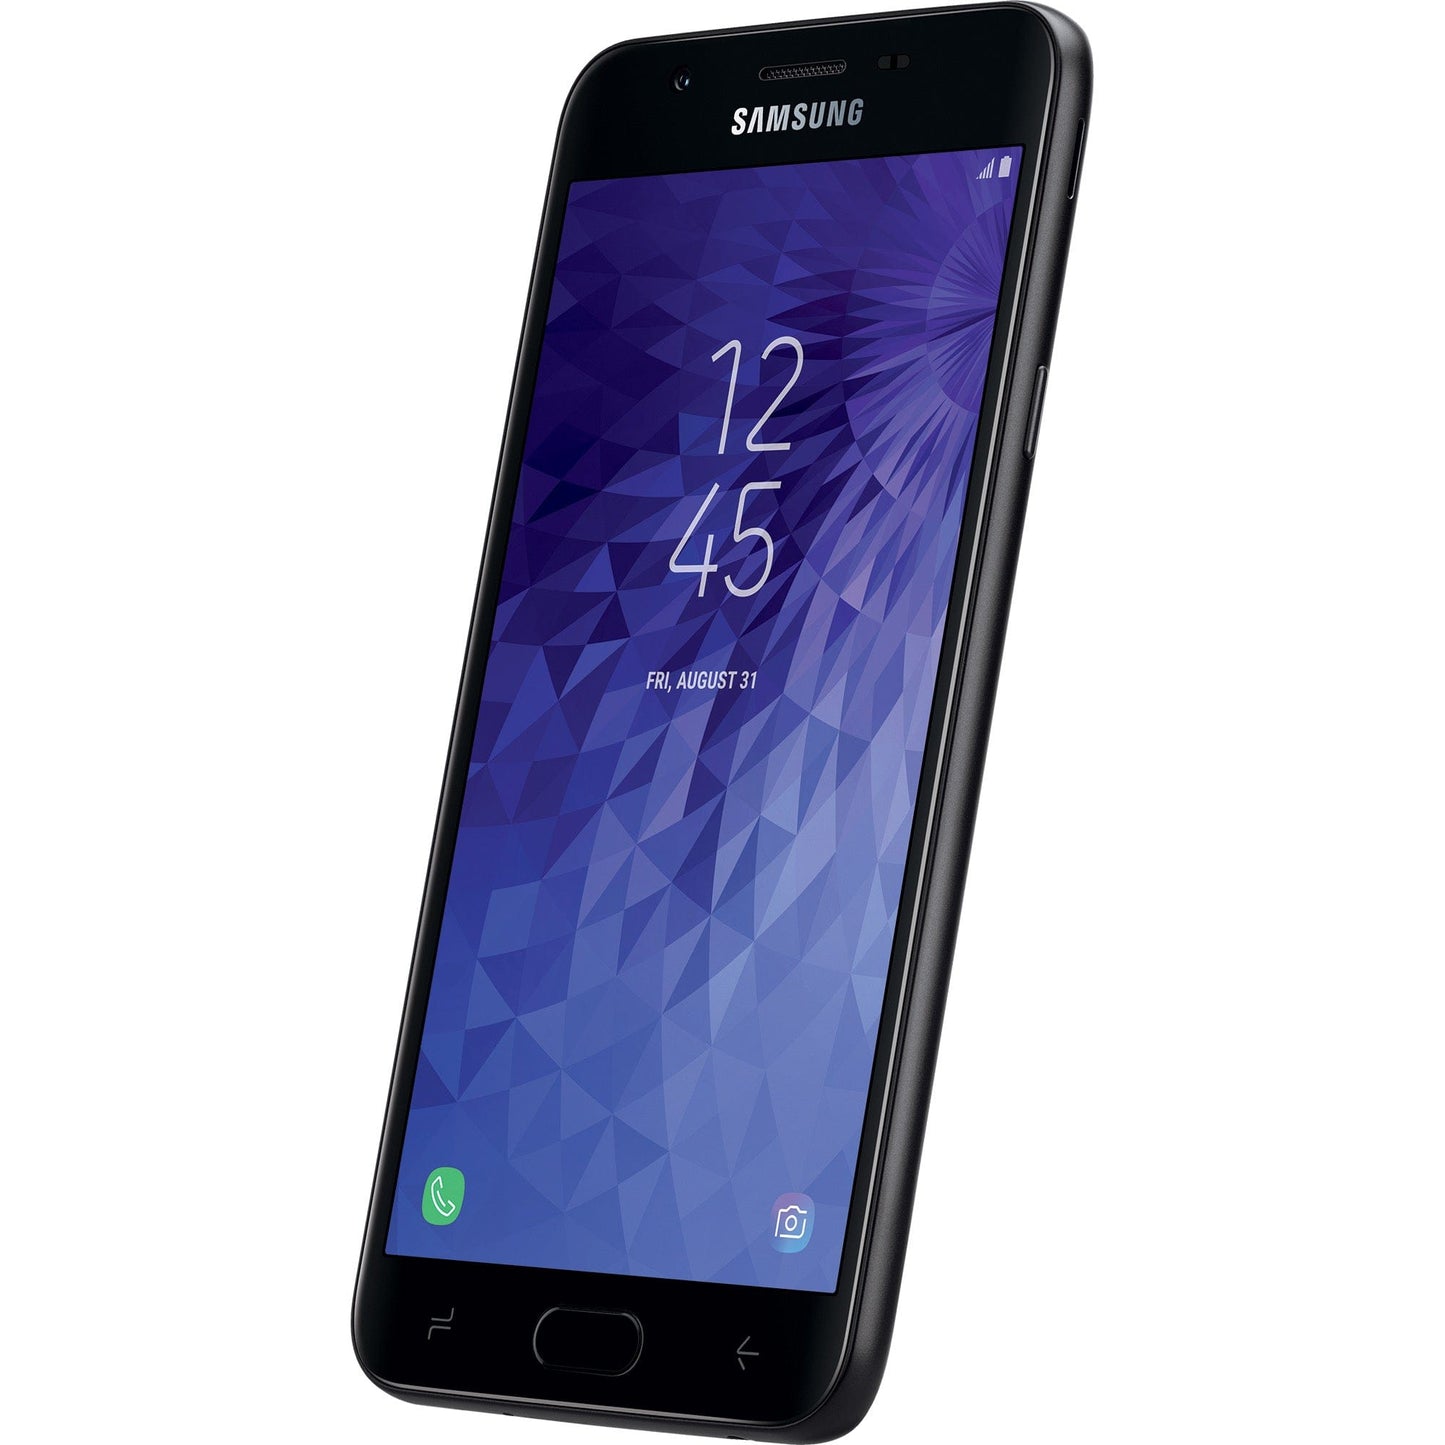 Samsung Galaxy J7 Crown - 32 GB - Black - Simple Mobile - GSM